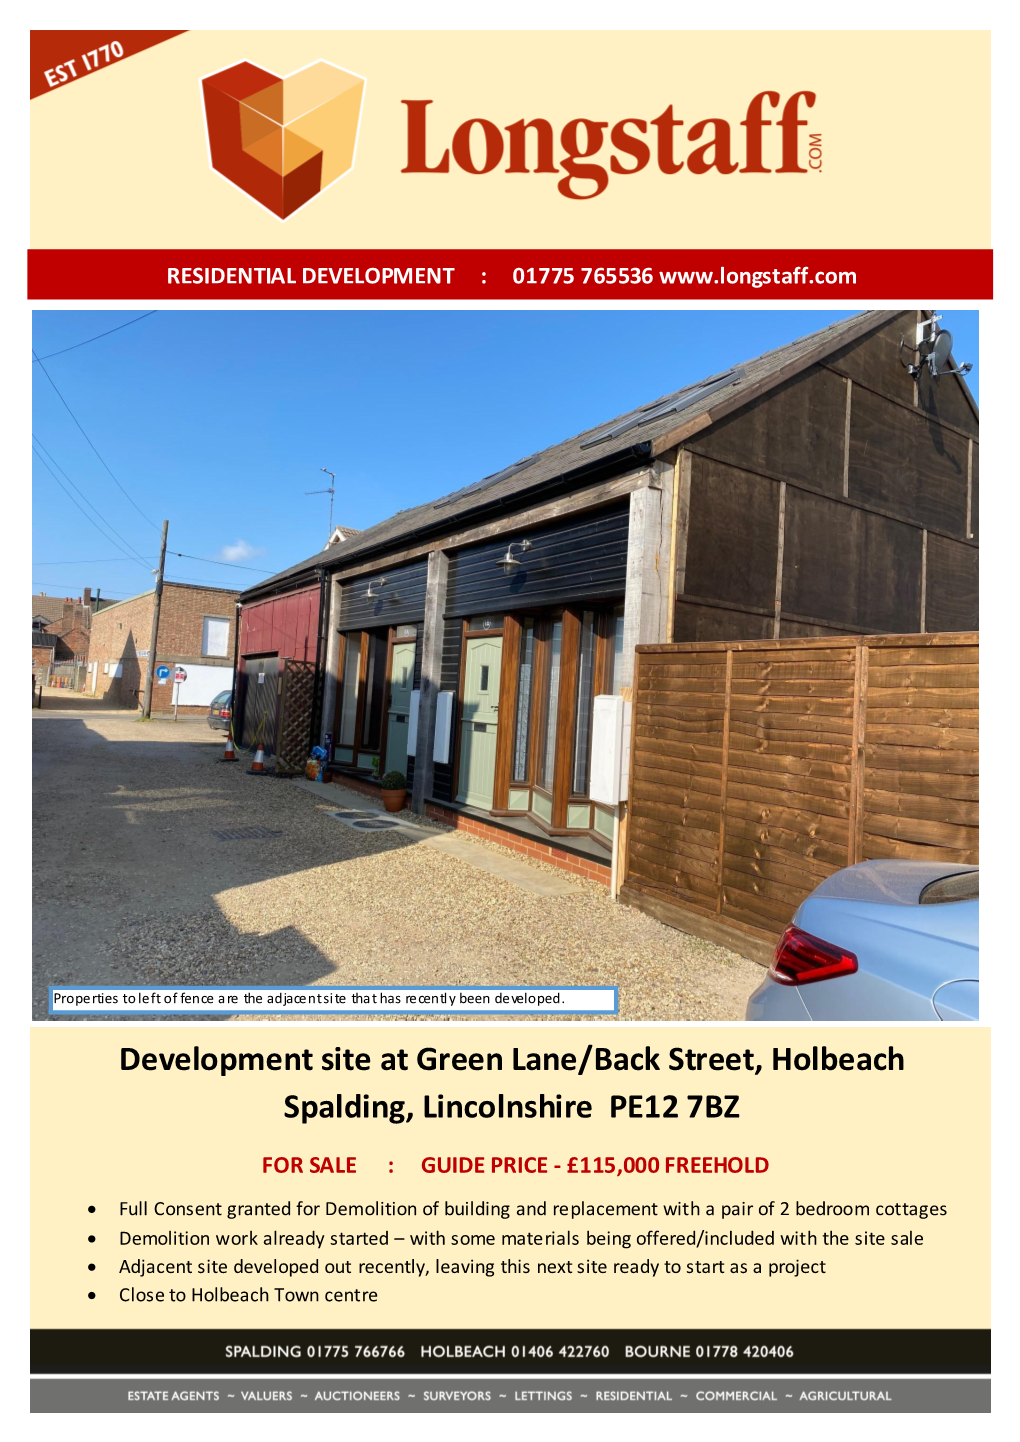 Development Site at Green Lane/Back Street, Holbeach Spalding, Lincolnshire PE12